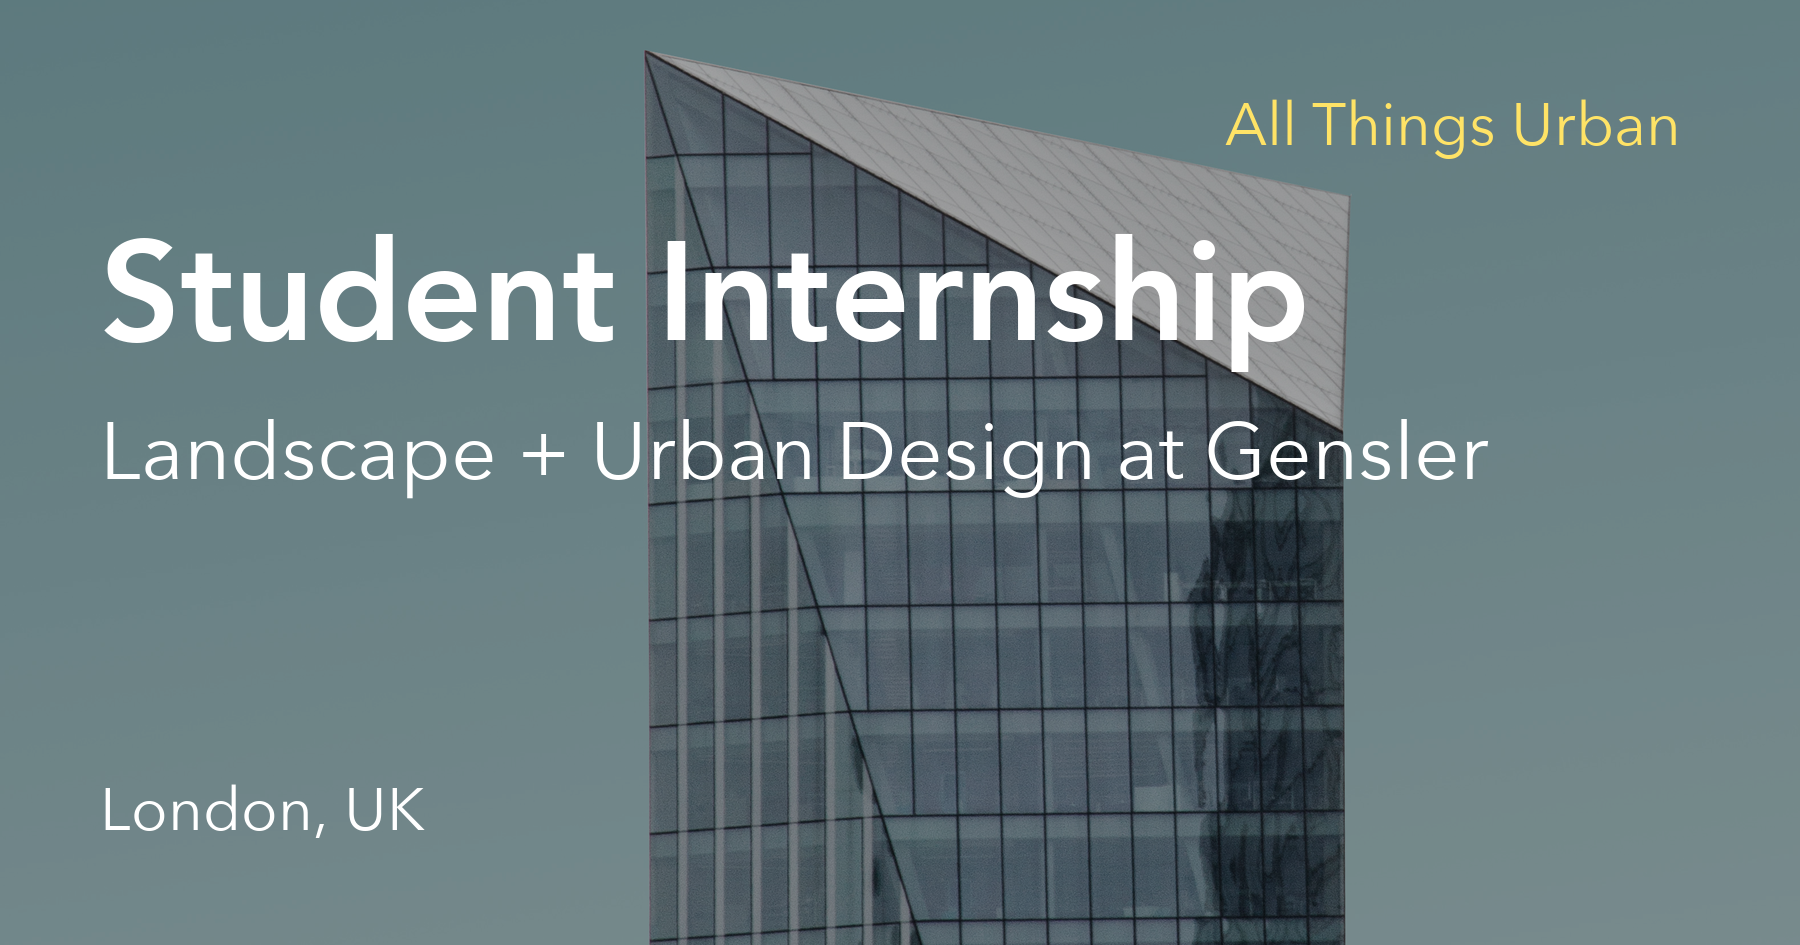 All Things Urban Student Internship Landscape + Urban Design at Gensler